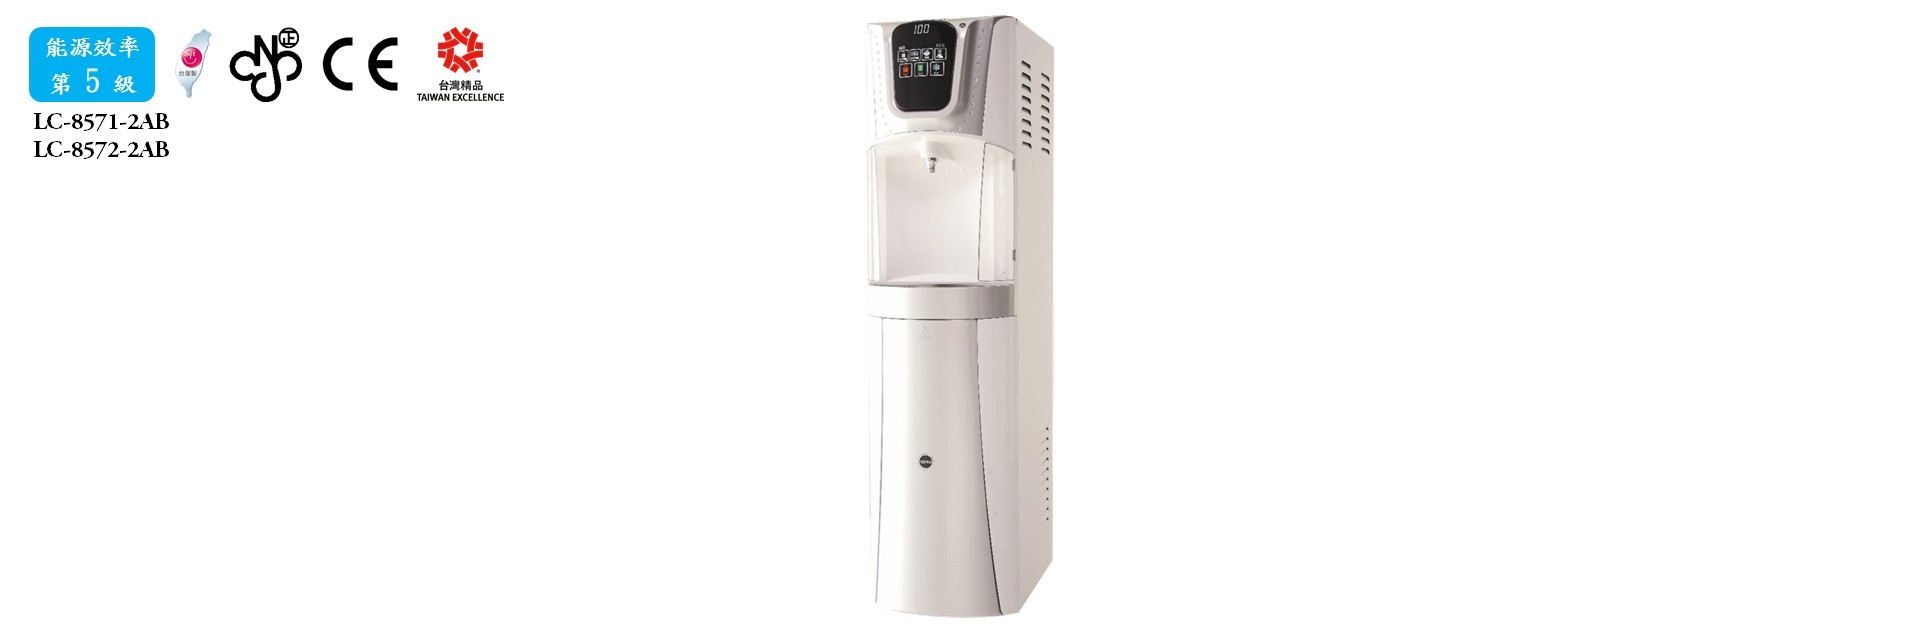 LC-8572系列直立型冰溫熱水鑽節能飲水機